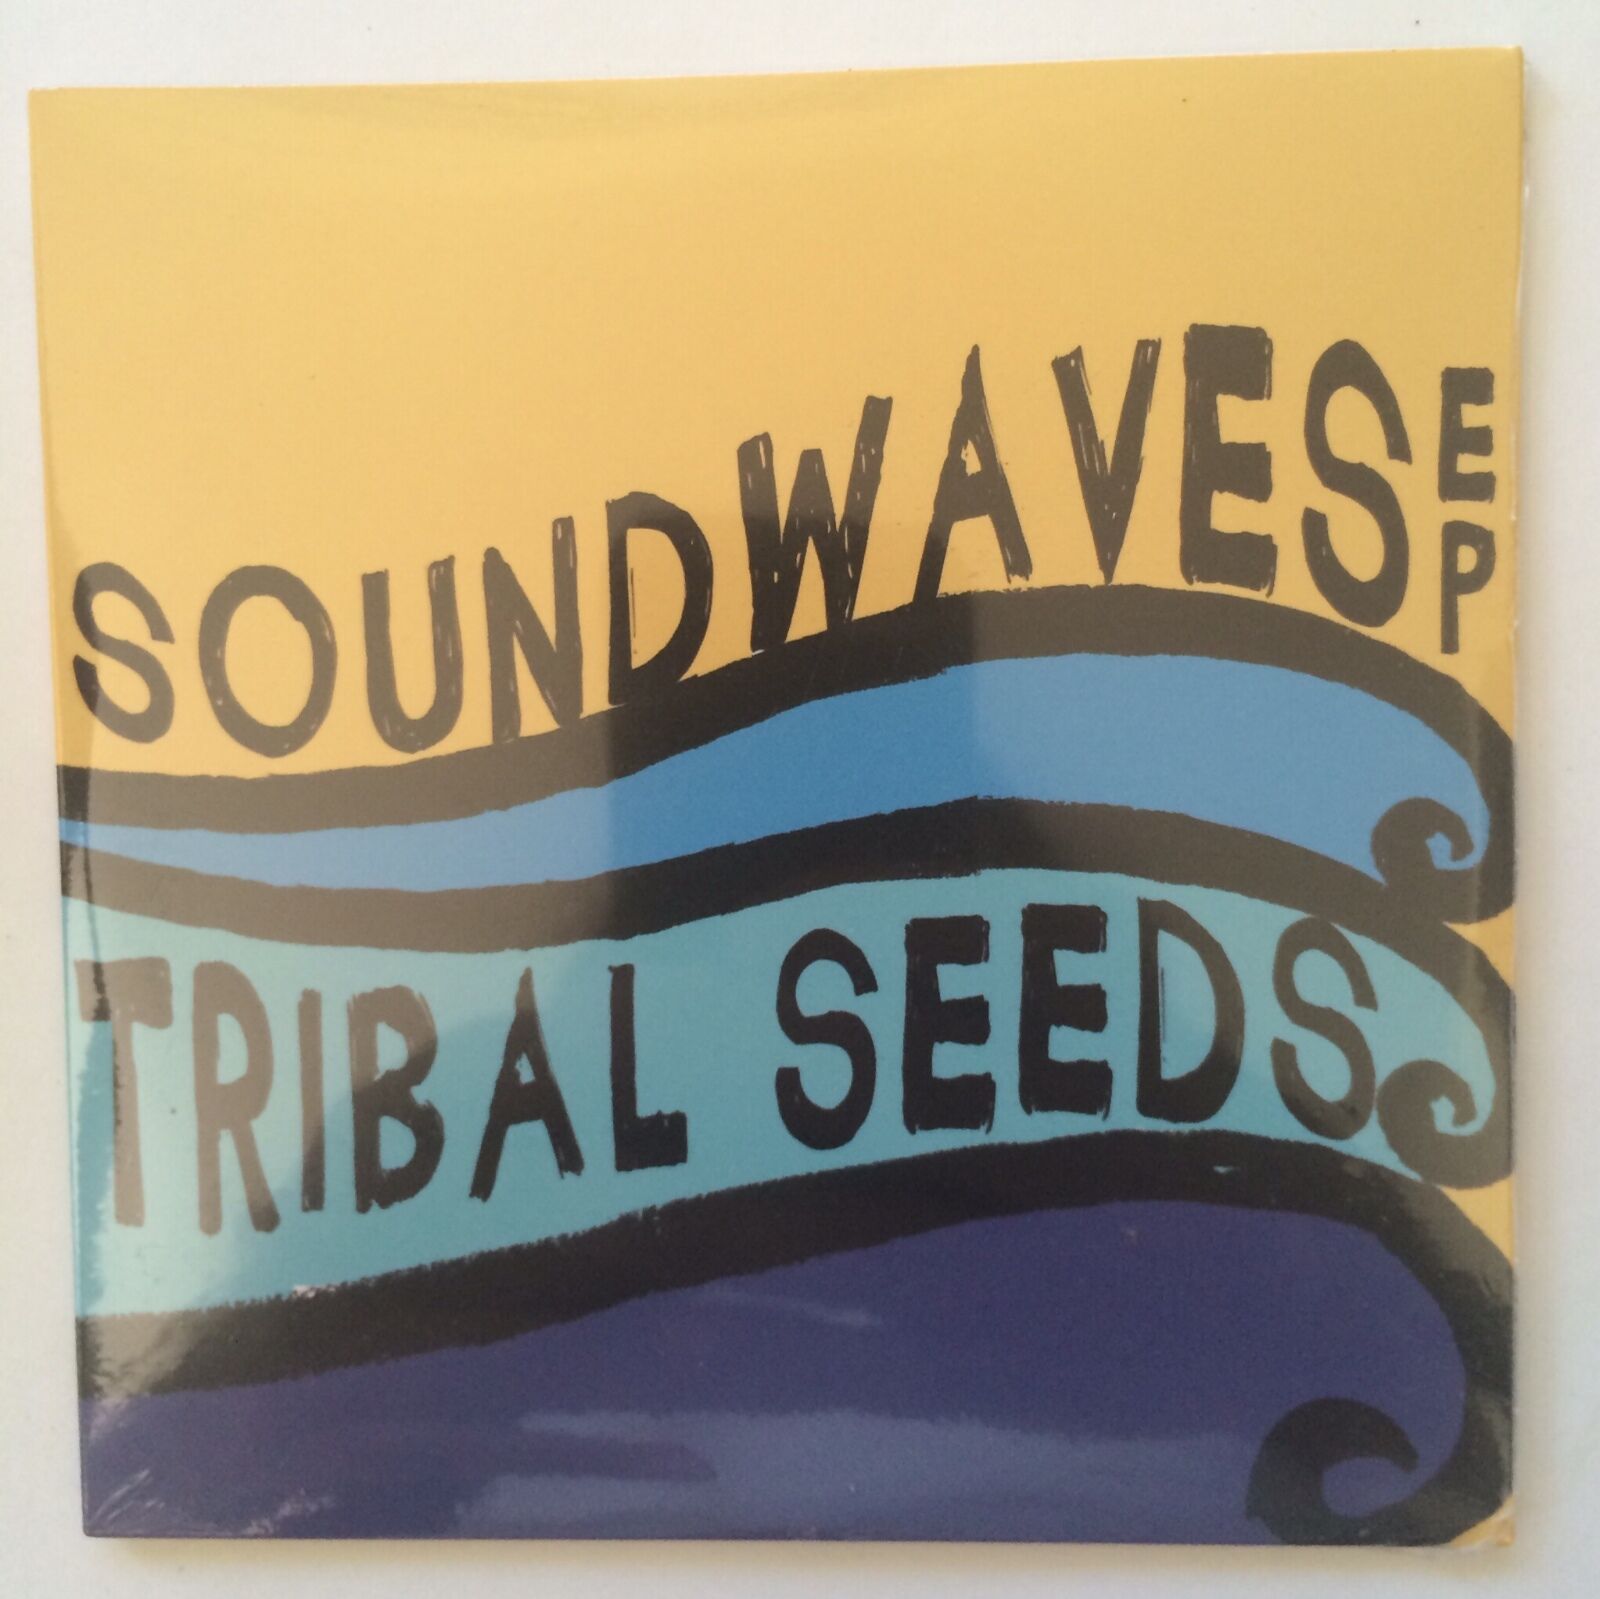 Tribal Seeds Soundwaves EP CD Reggae Brand New Sealed (2009) - Rare Hard To Find